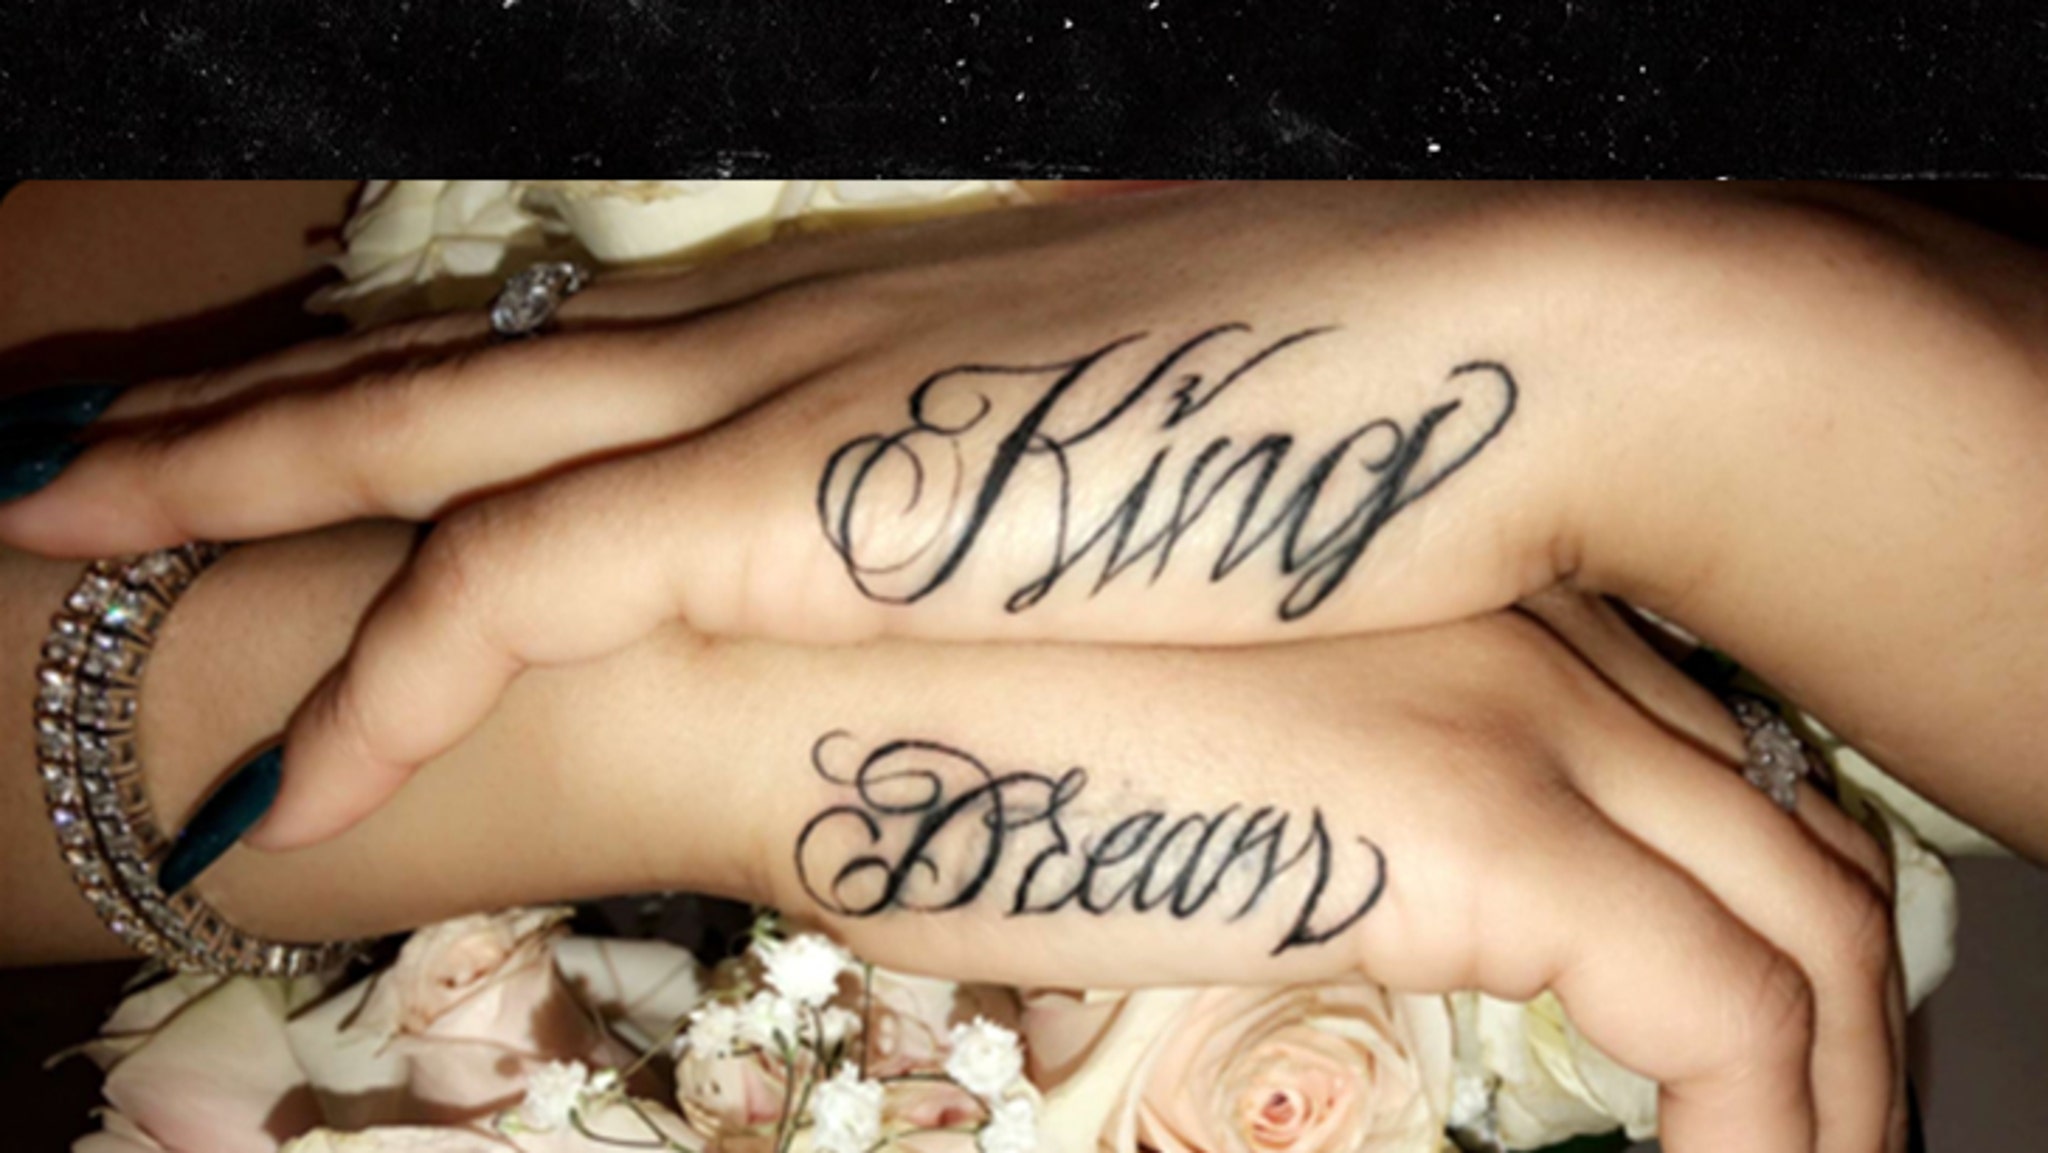 Blac Chyna Destroys Future Tattoo with New Dream